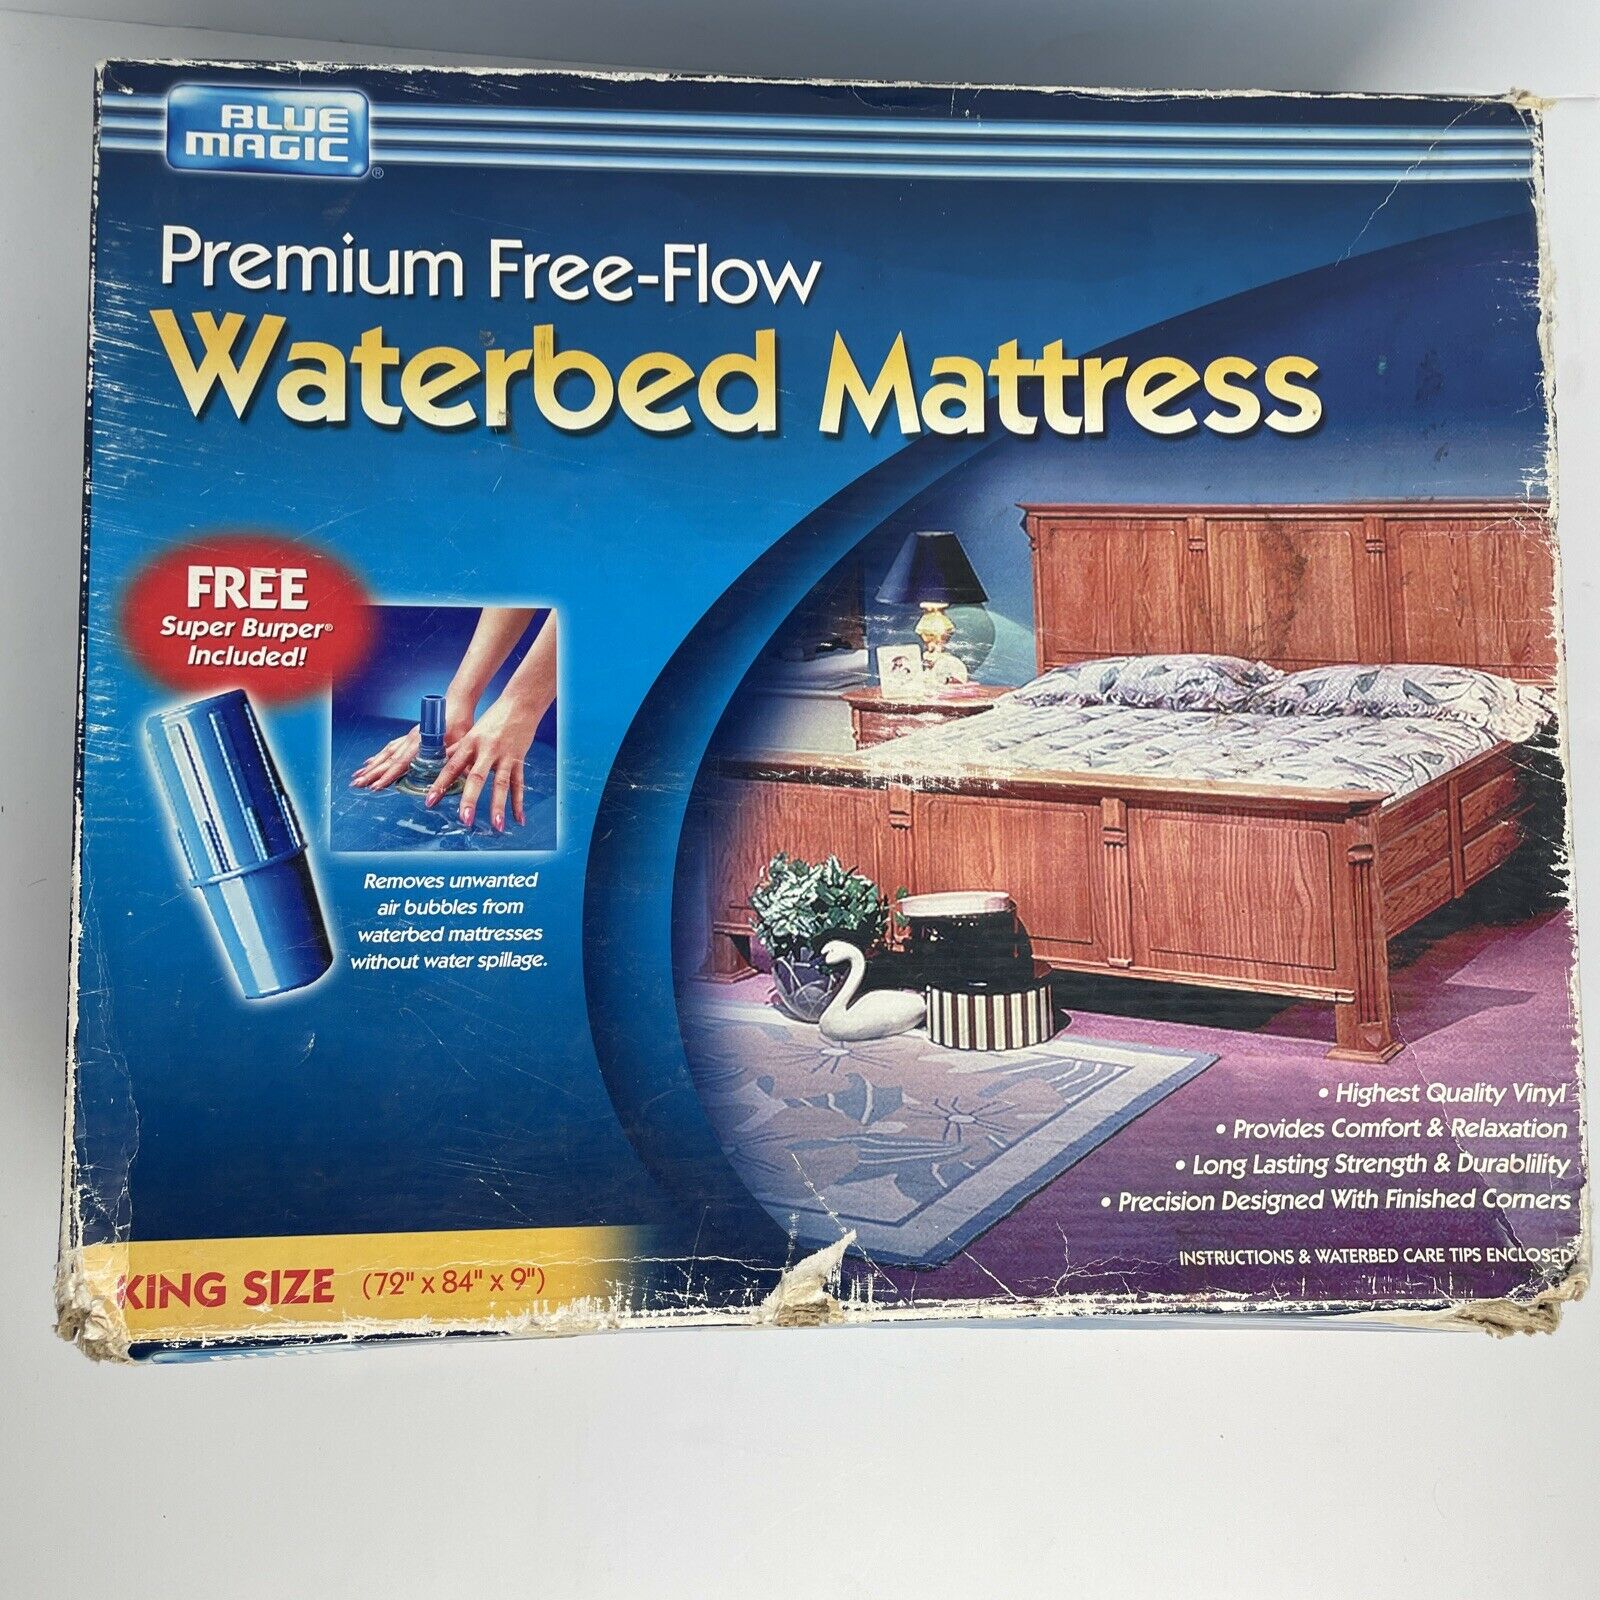 Vintage Nos Blue Magic King Premium Free-flow Waterbed Mattress With Burper